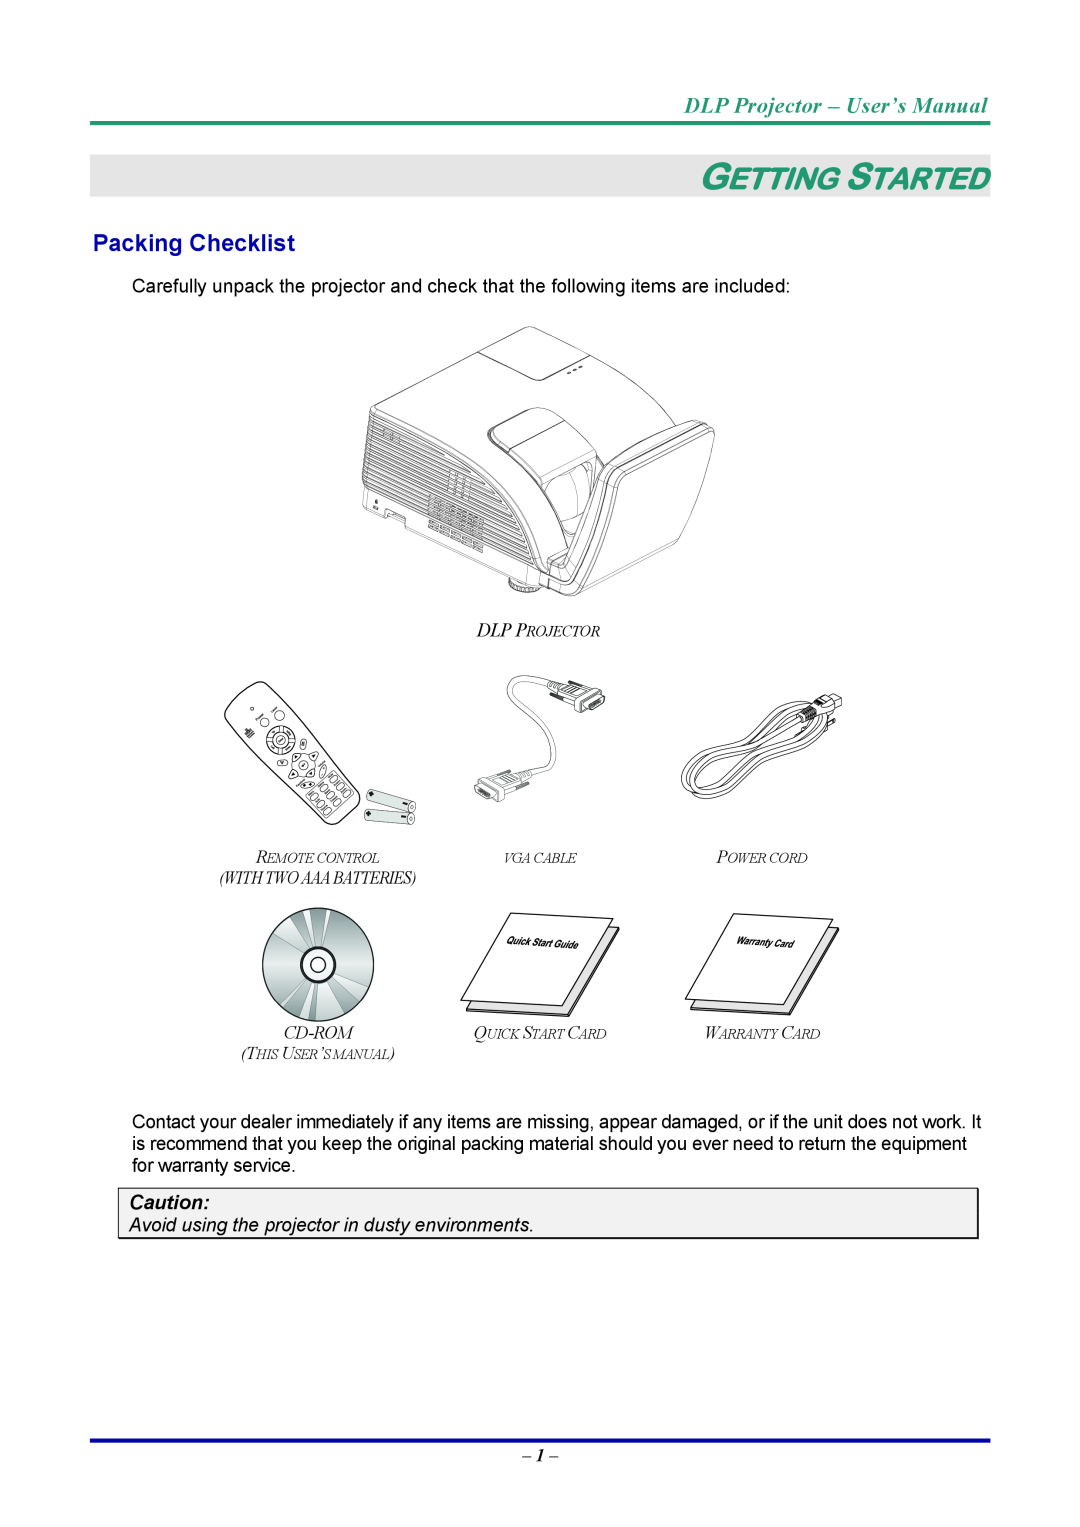 Vivitek D7 user manual Getting Started, Packing Checklist, DLP Projector - User’s Manual 